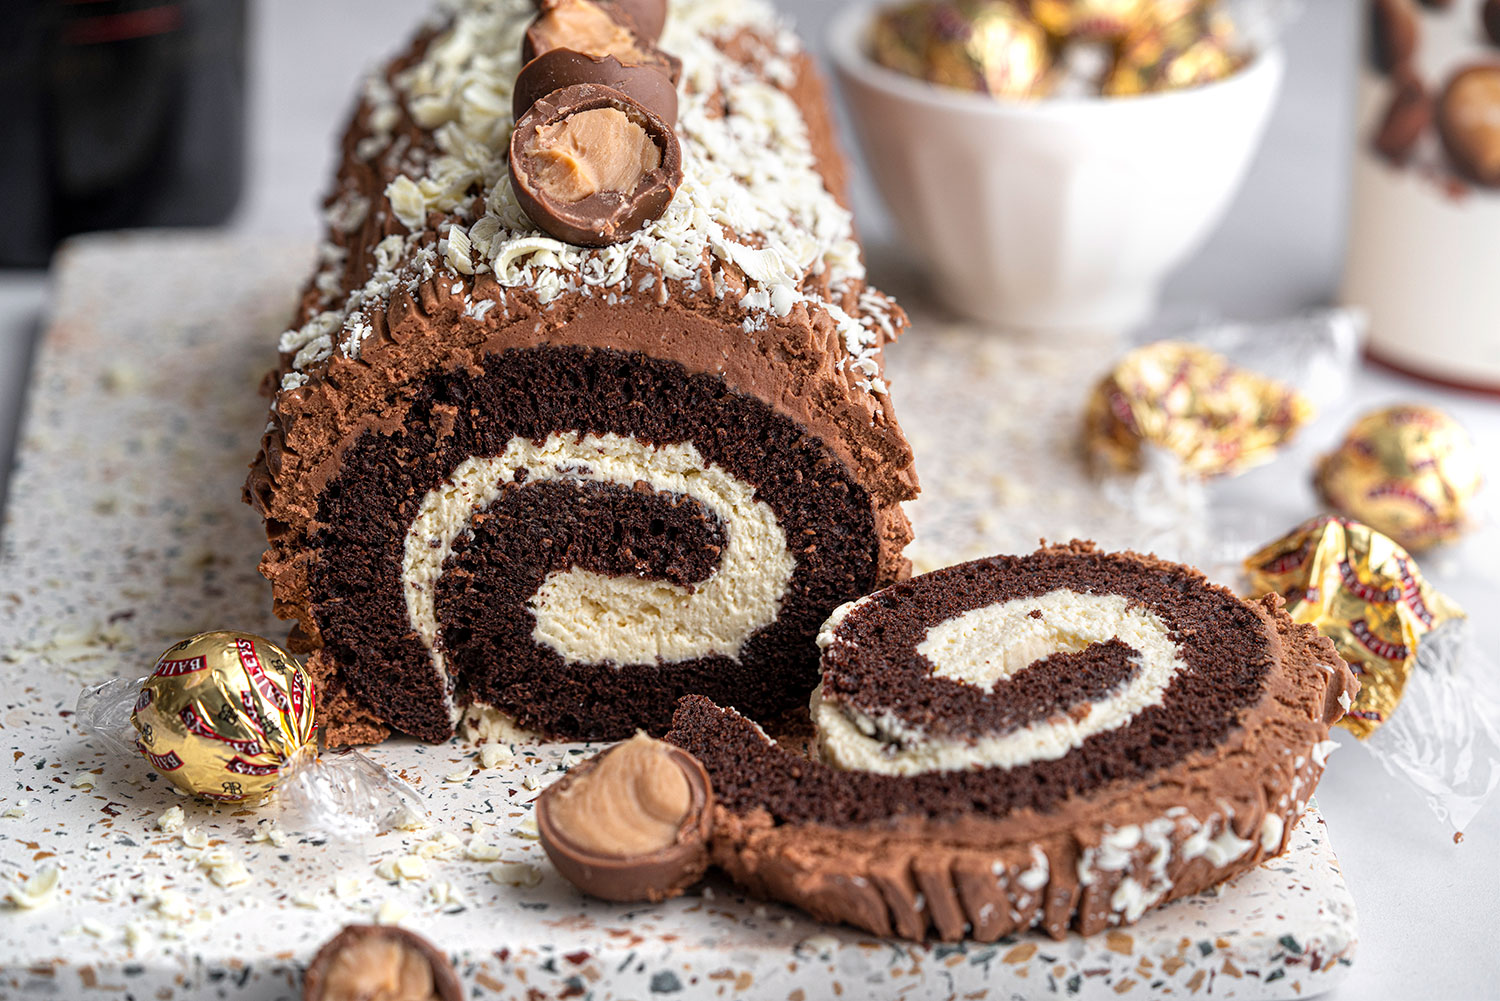 Macadamia and milk chocolate Yule log cake (Bûche de Noël) - The Pastry Nerd